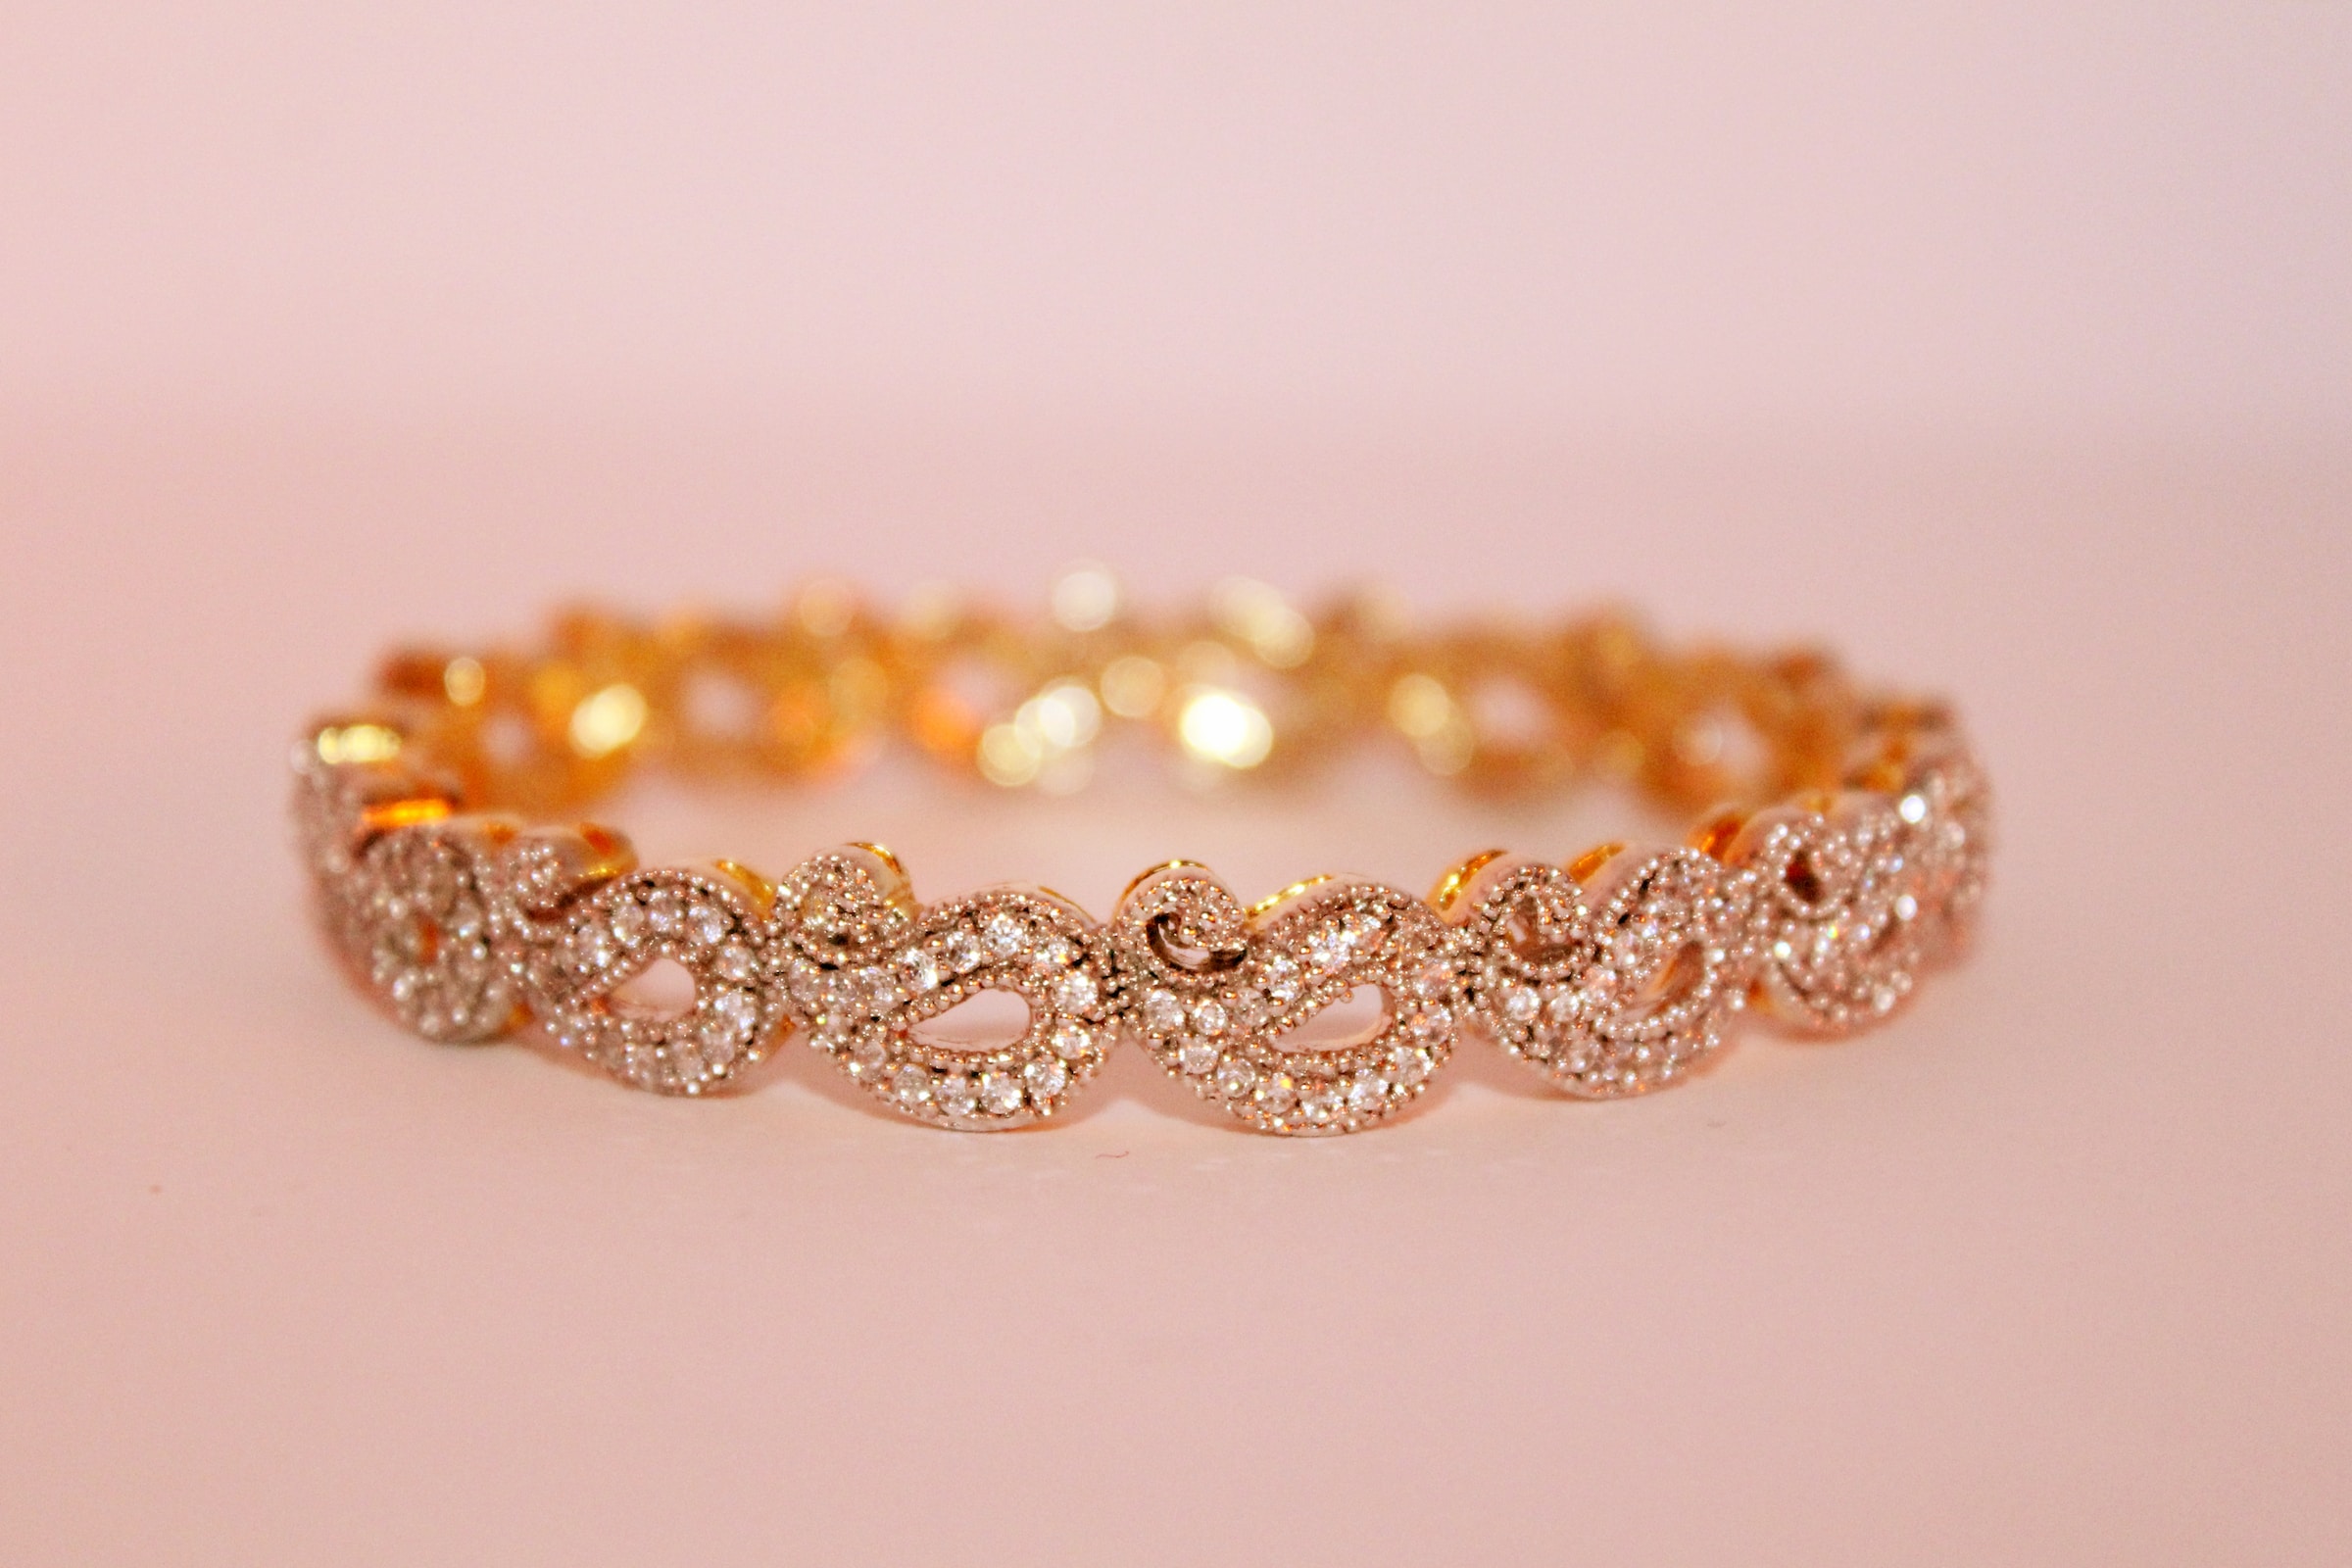 Bracelet en perles d'or | Source : Unsplash